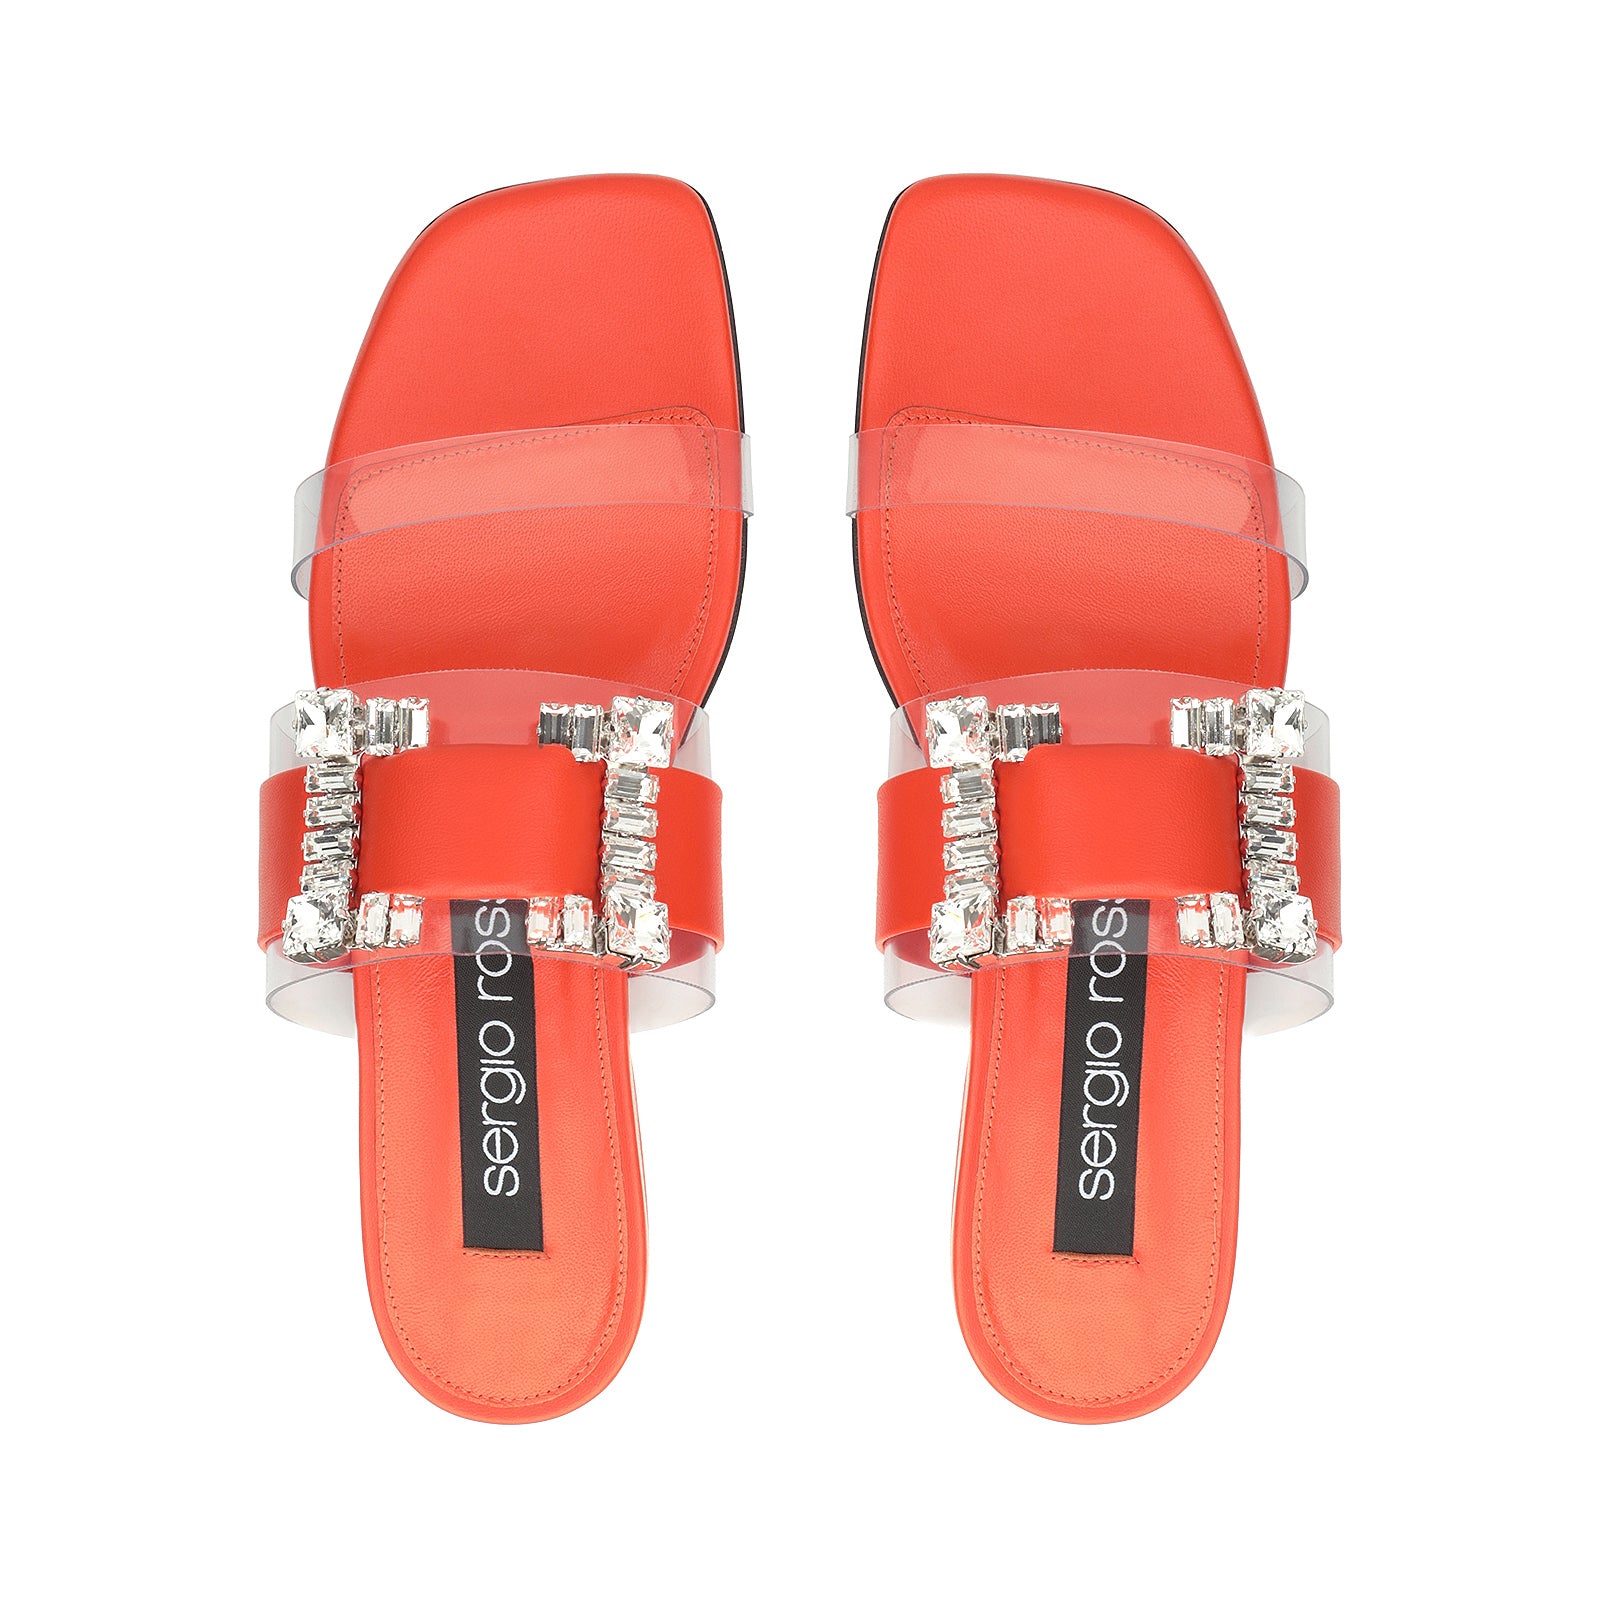 Sr Twenty strappy flat sandals - Mandarine